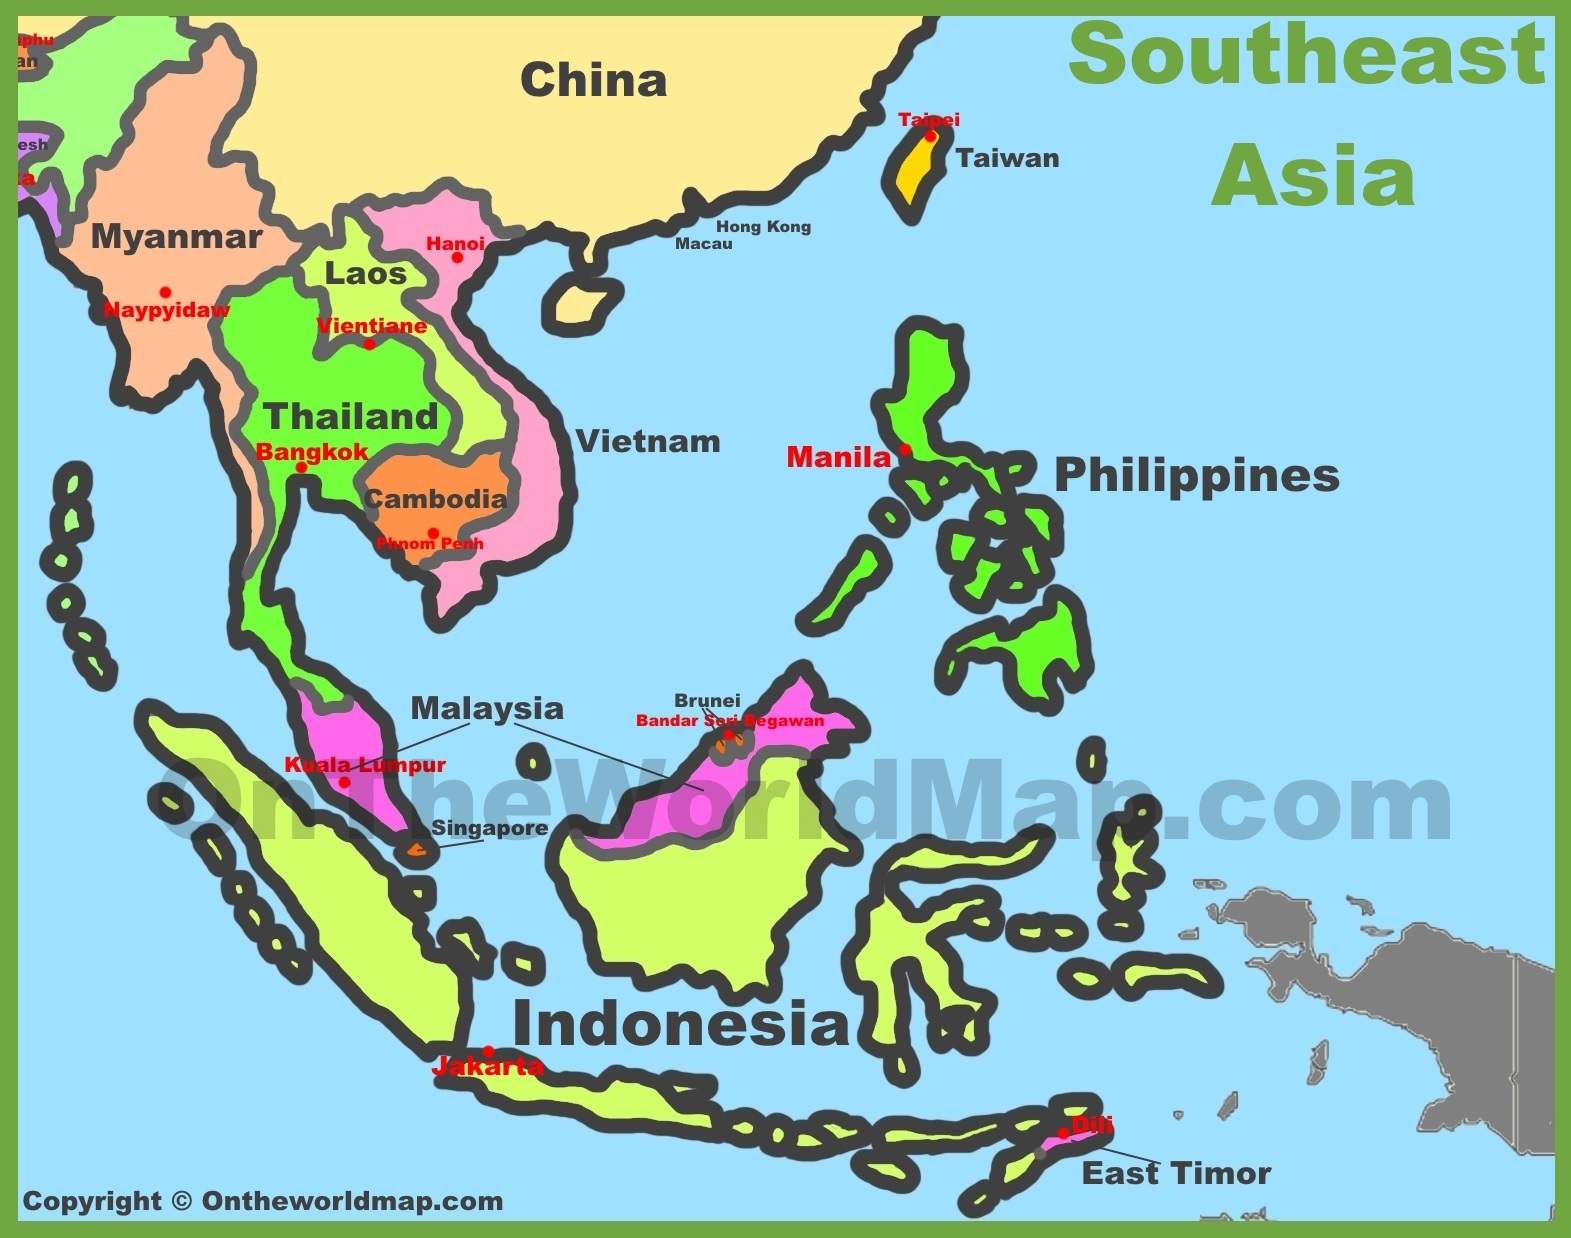 southeast asia sea, paracels, spratlys islands, hoàng sa, trường sa Việt Nam